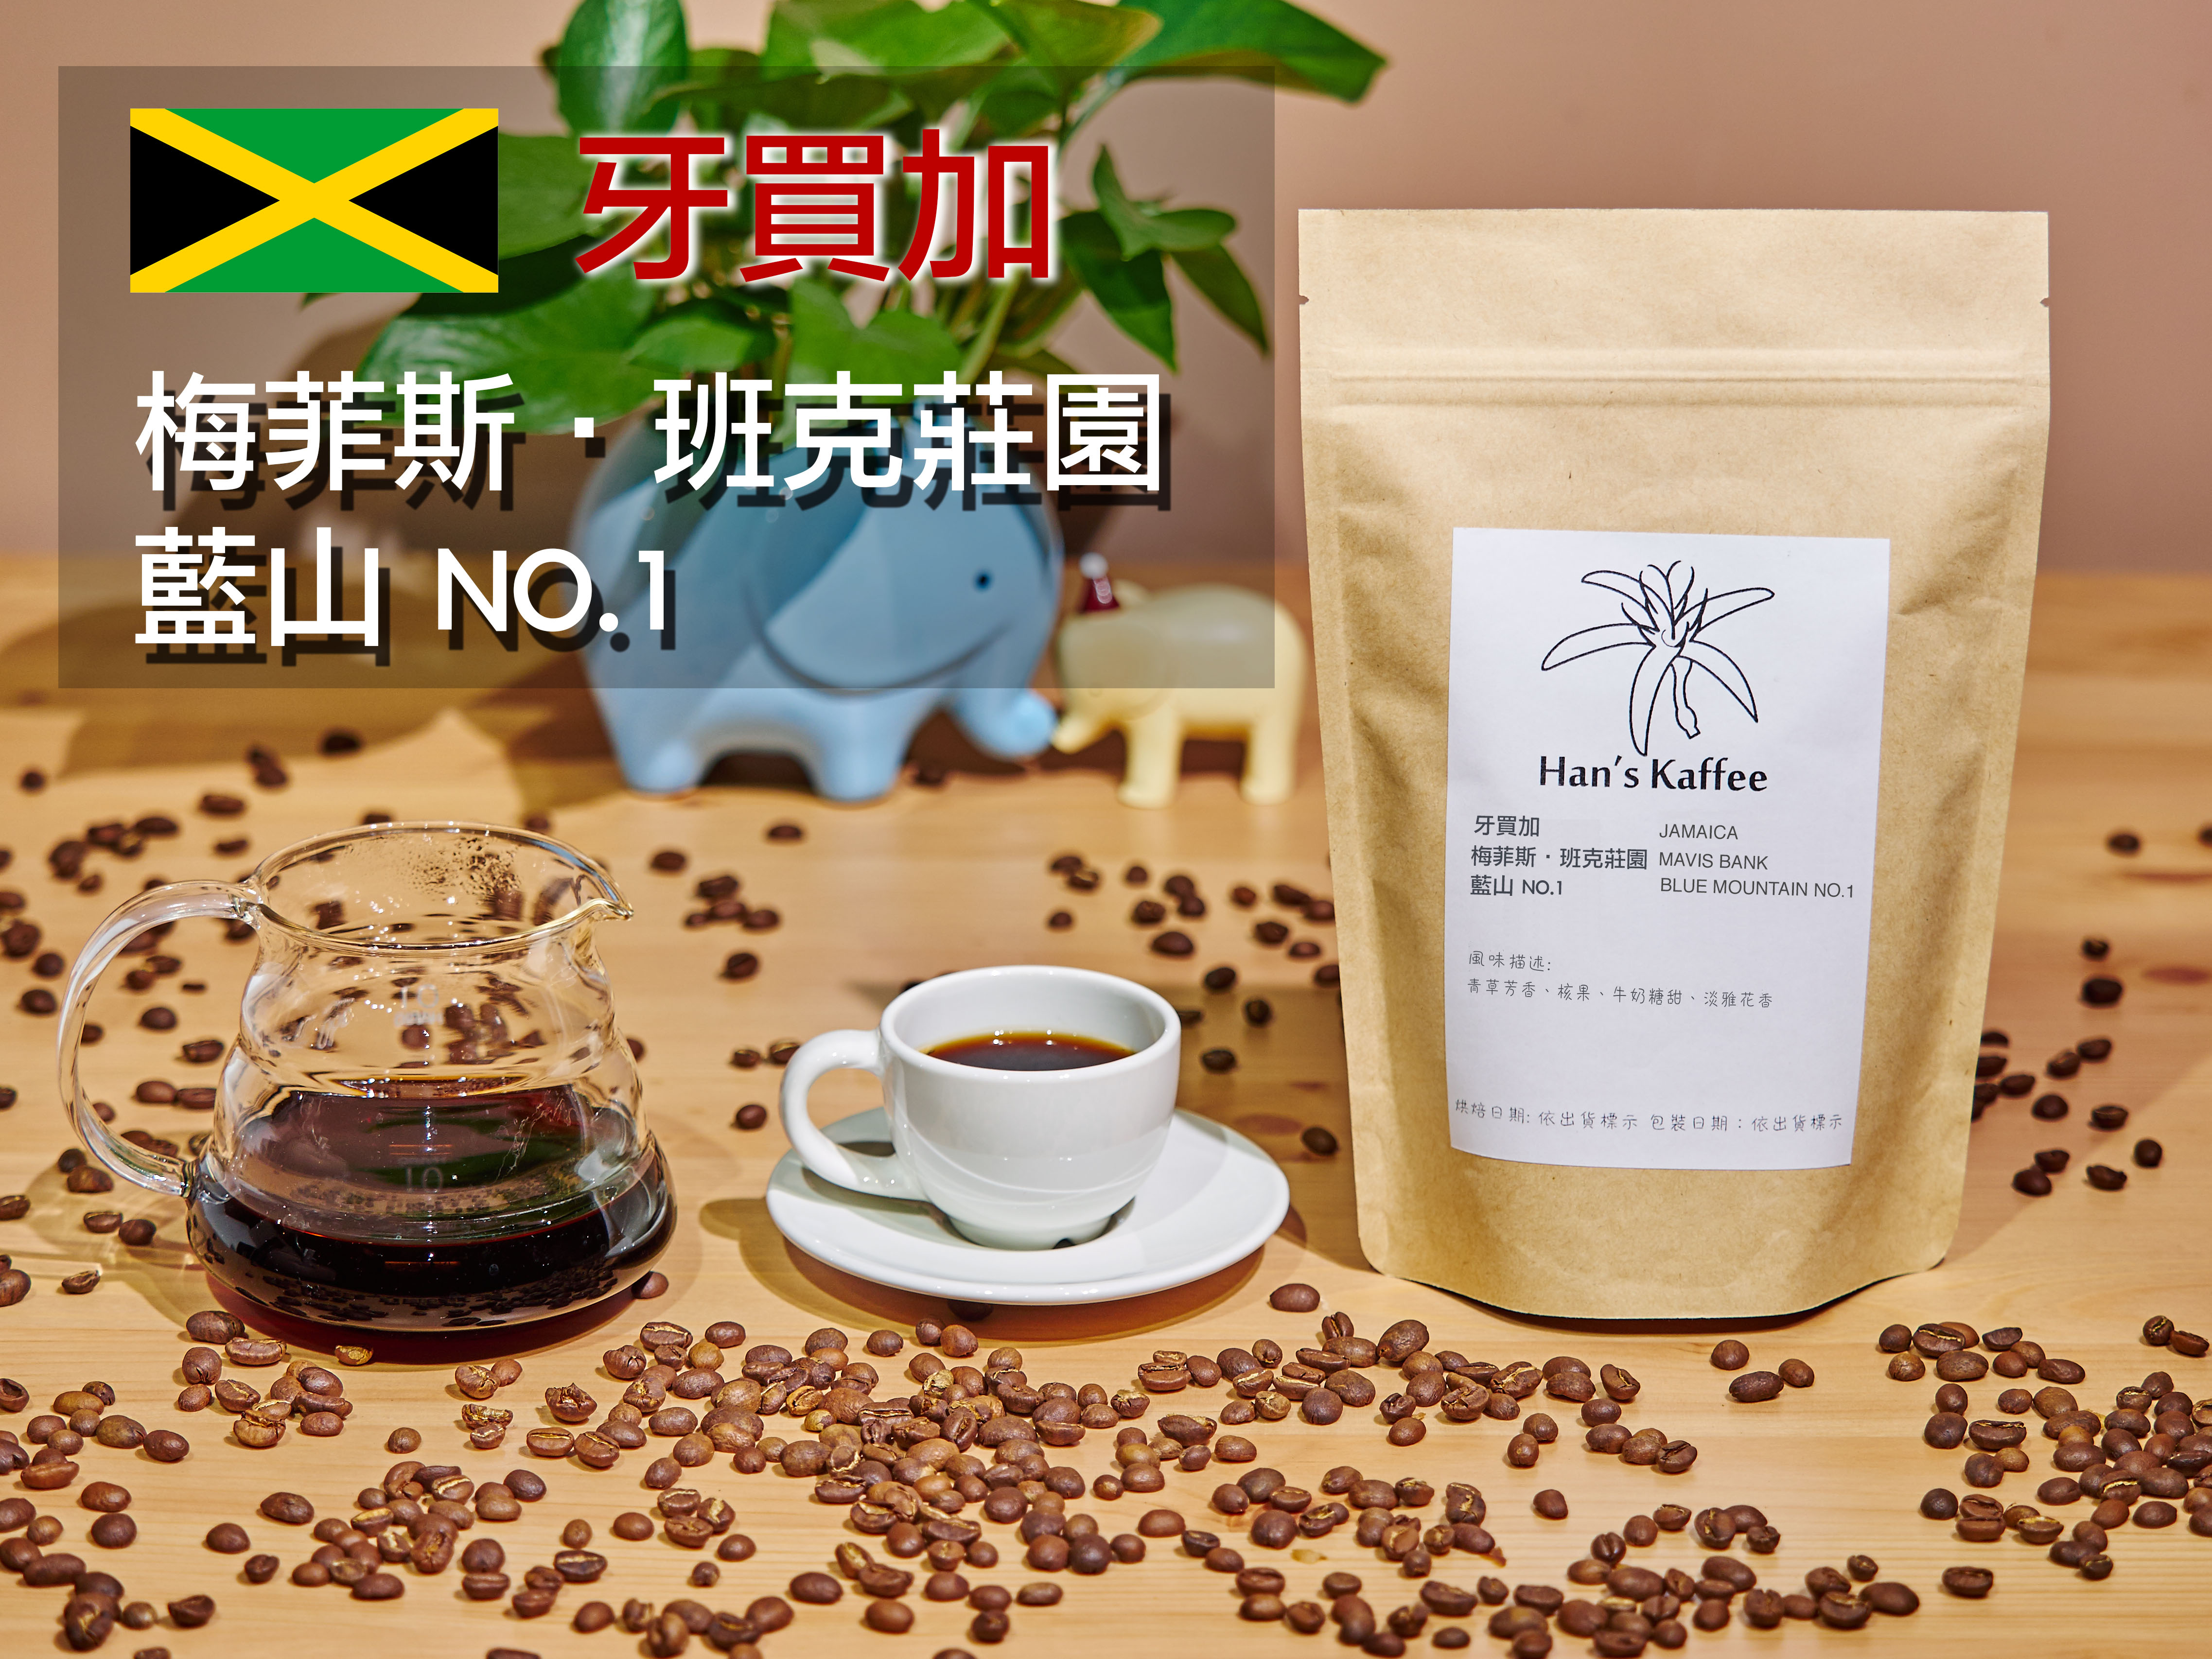 <br/><br/>  【接單烘焙】精品咖啡 熟豆 Jamaica Mavis Bank Blue Mountain no.1 牙買加 梅菲斯?班克 莊園 藍山 no.1 半磅<br/><br/>